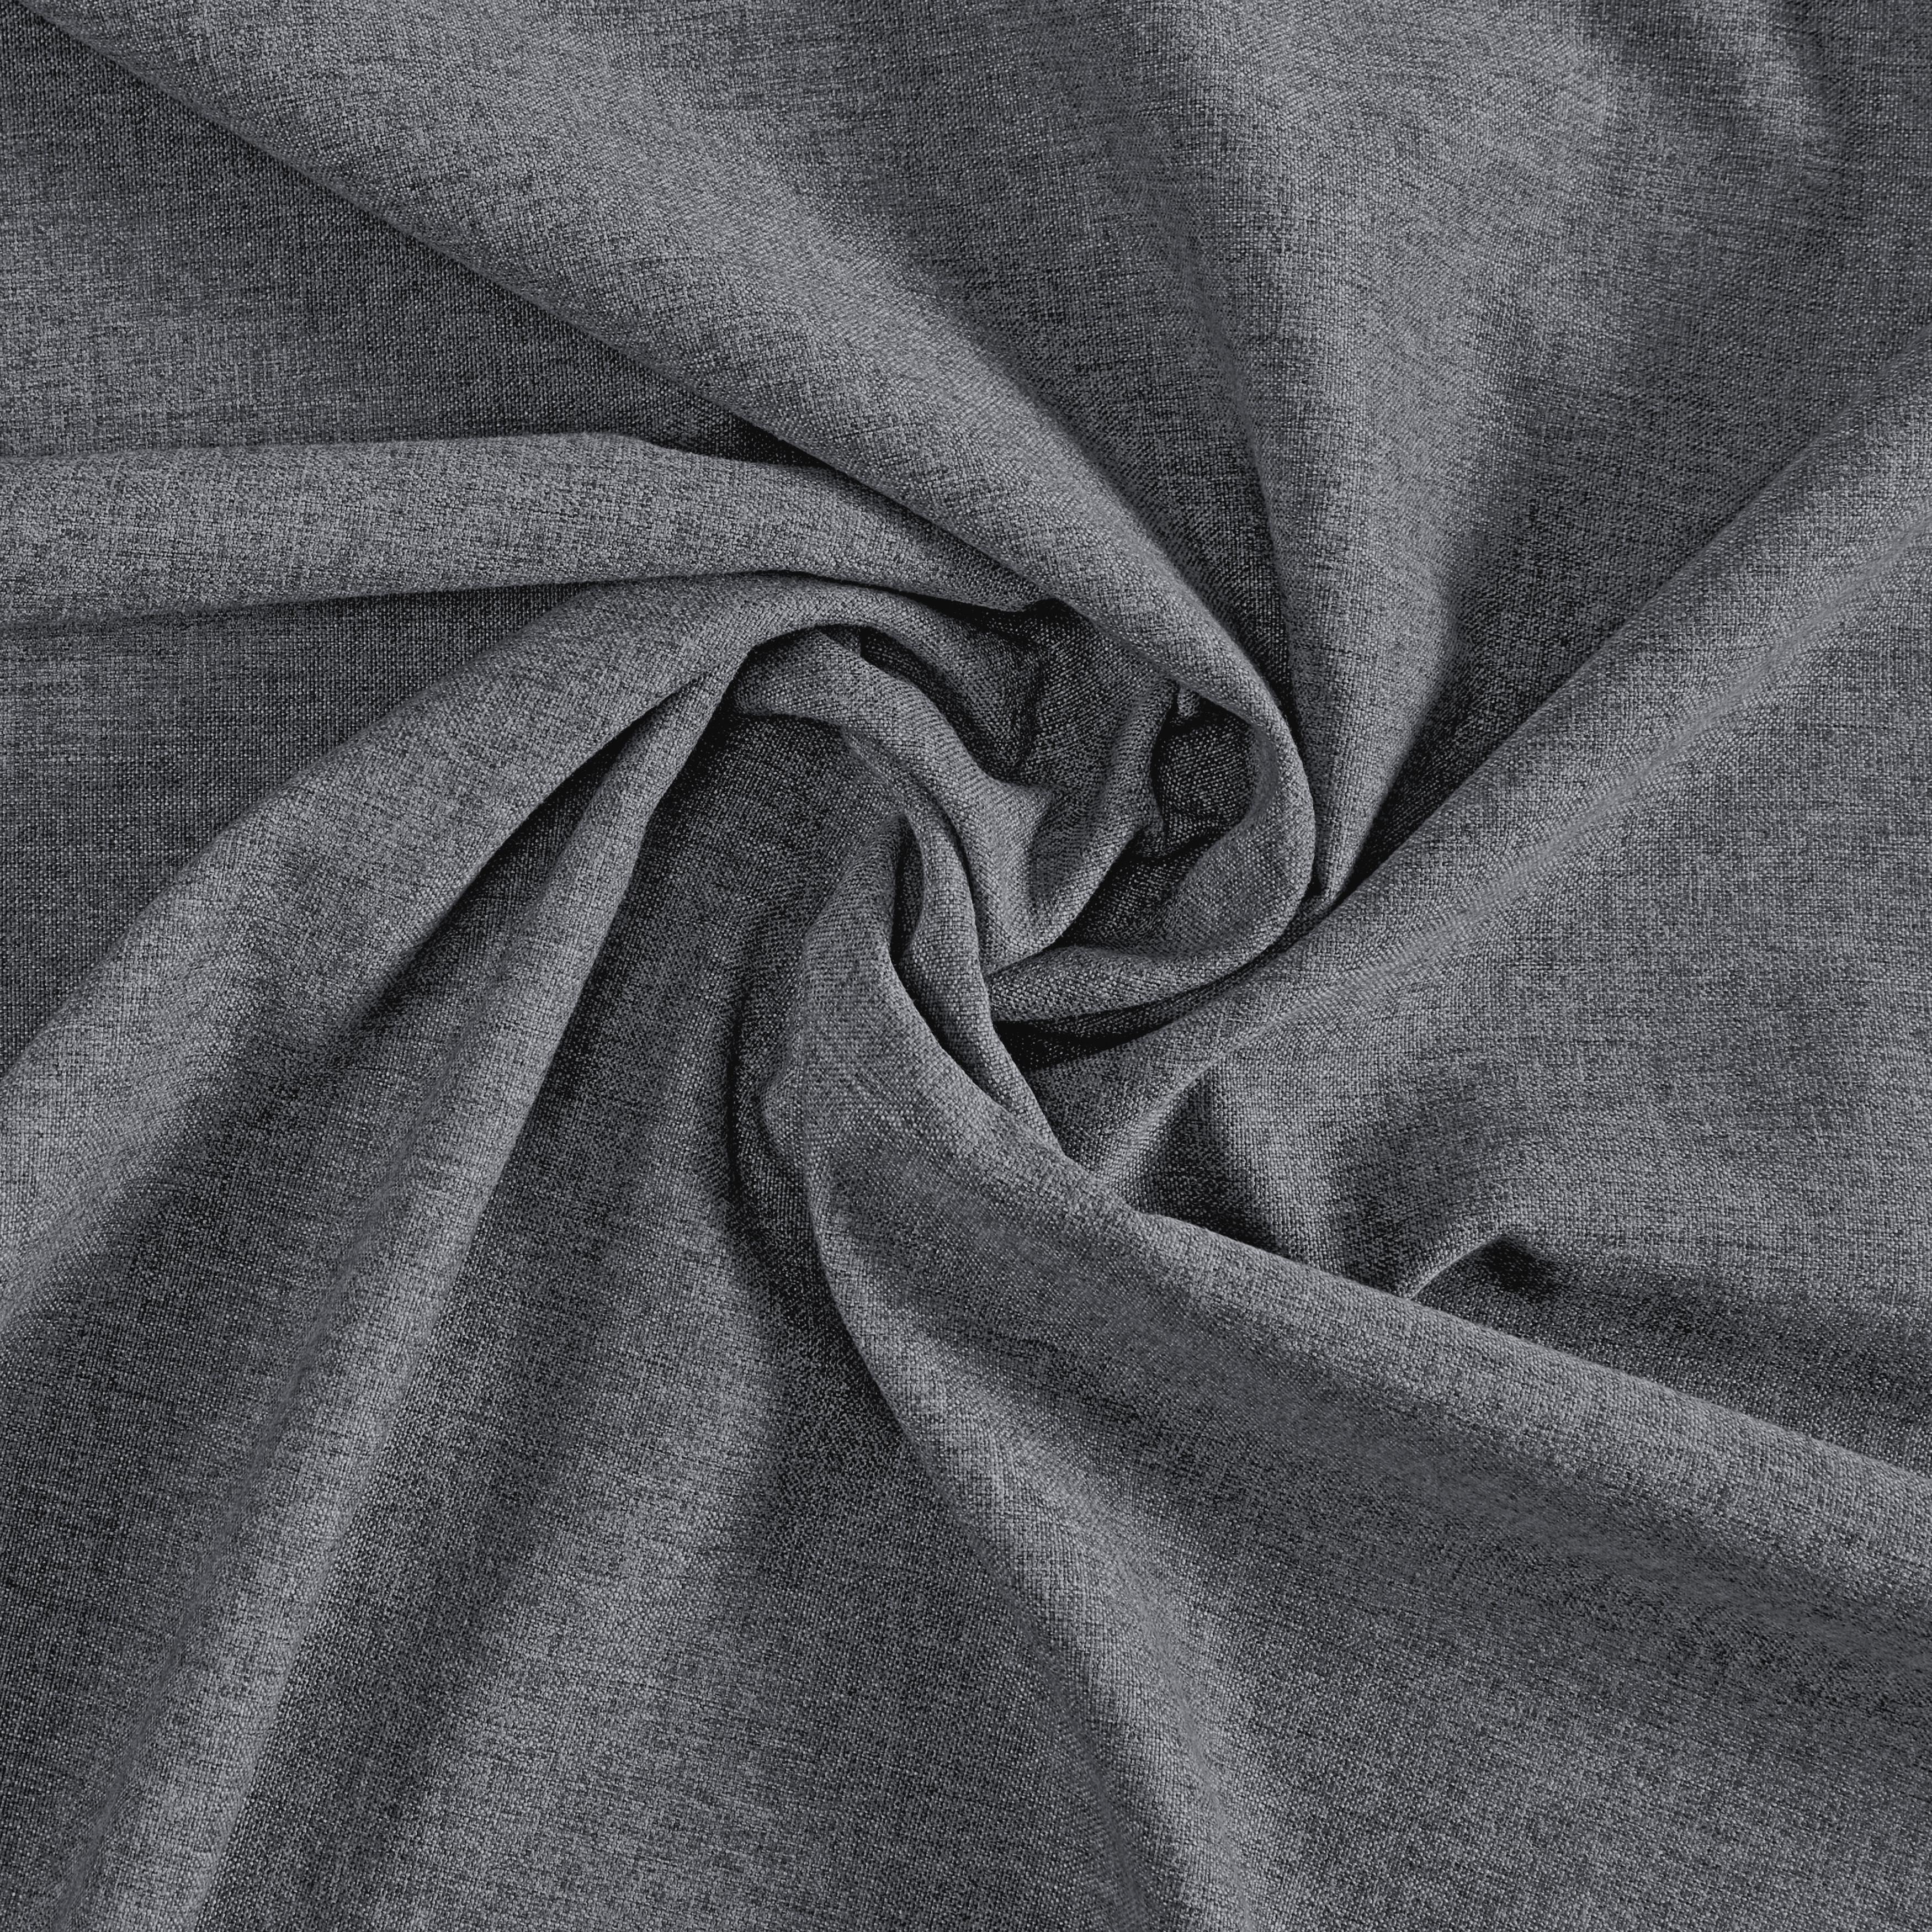 Gotova Zavjesa 135/145cm Ulrich - antracit, Modern, tekstil (135/145cm) - Modern Living